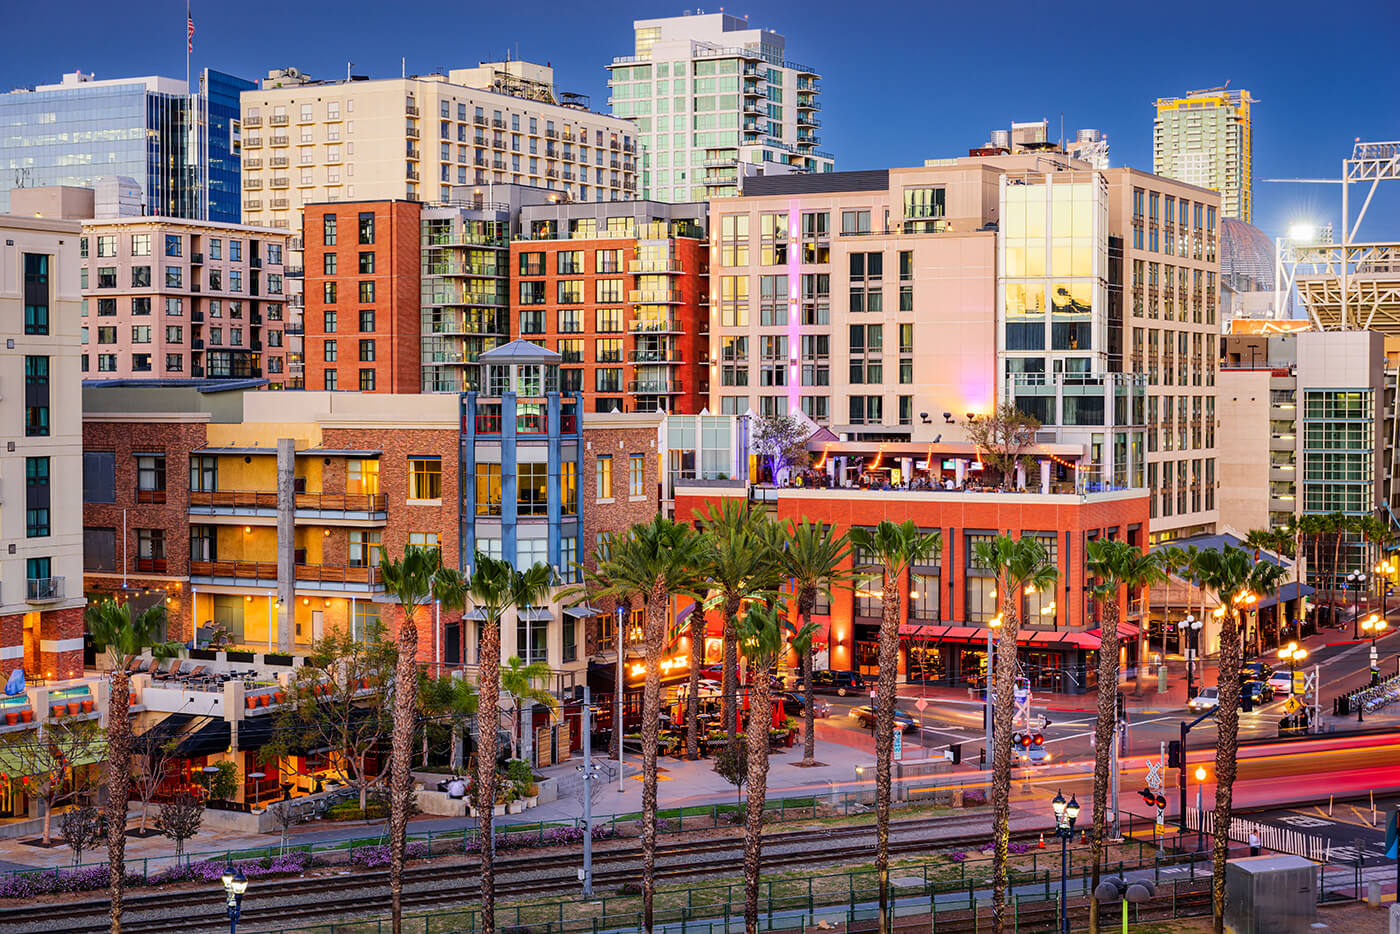 San Diego's cityscape boasts striking buildings